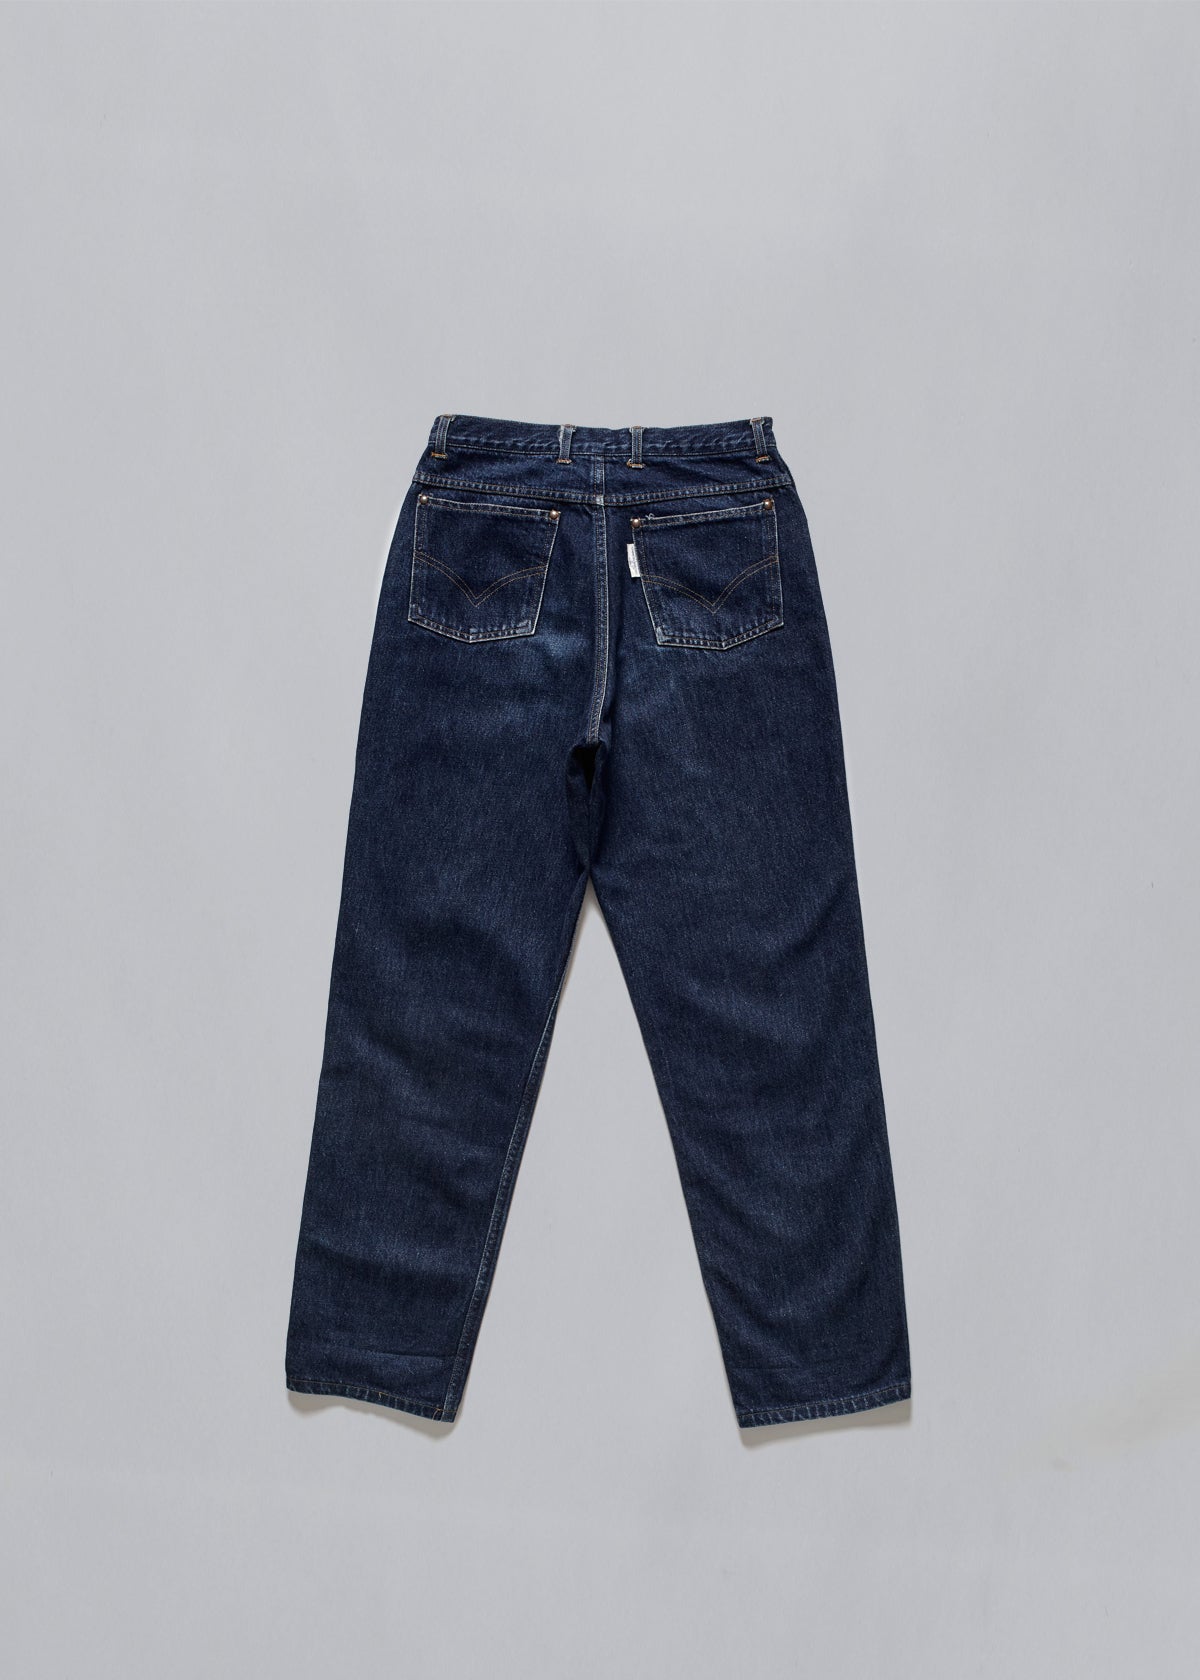 Homme 501 Parody Jeans 1990's - Medium - The Archivist Store